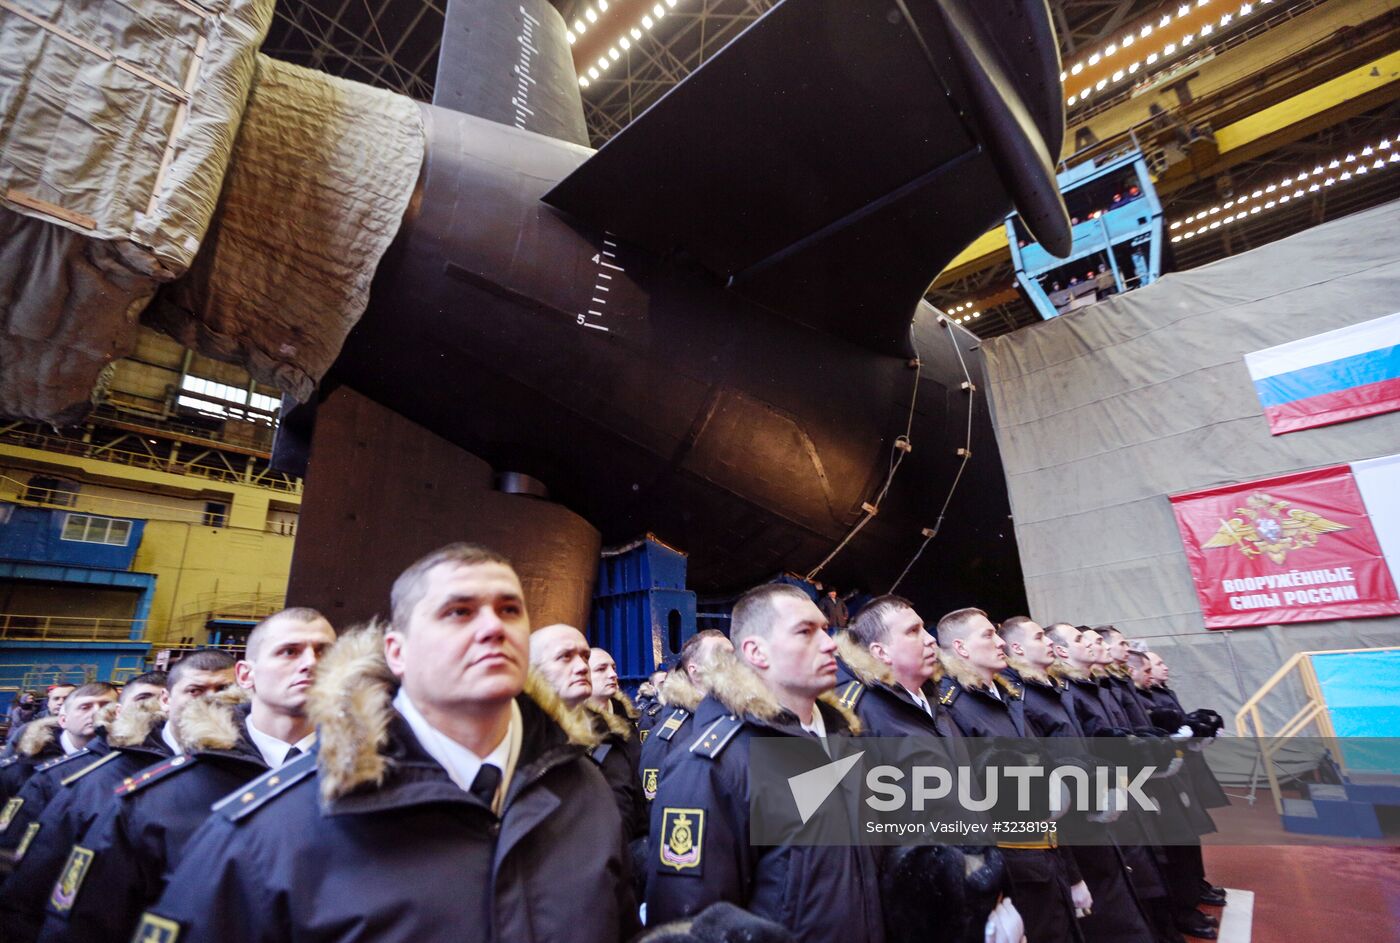 Launching Prince Vladimir nuclear-powered submarine cruiser in Severodvinsk